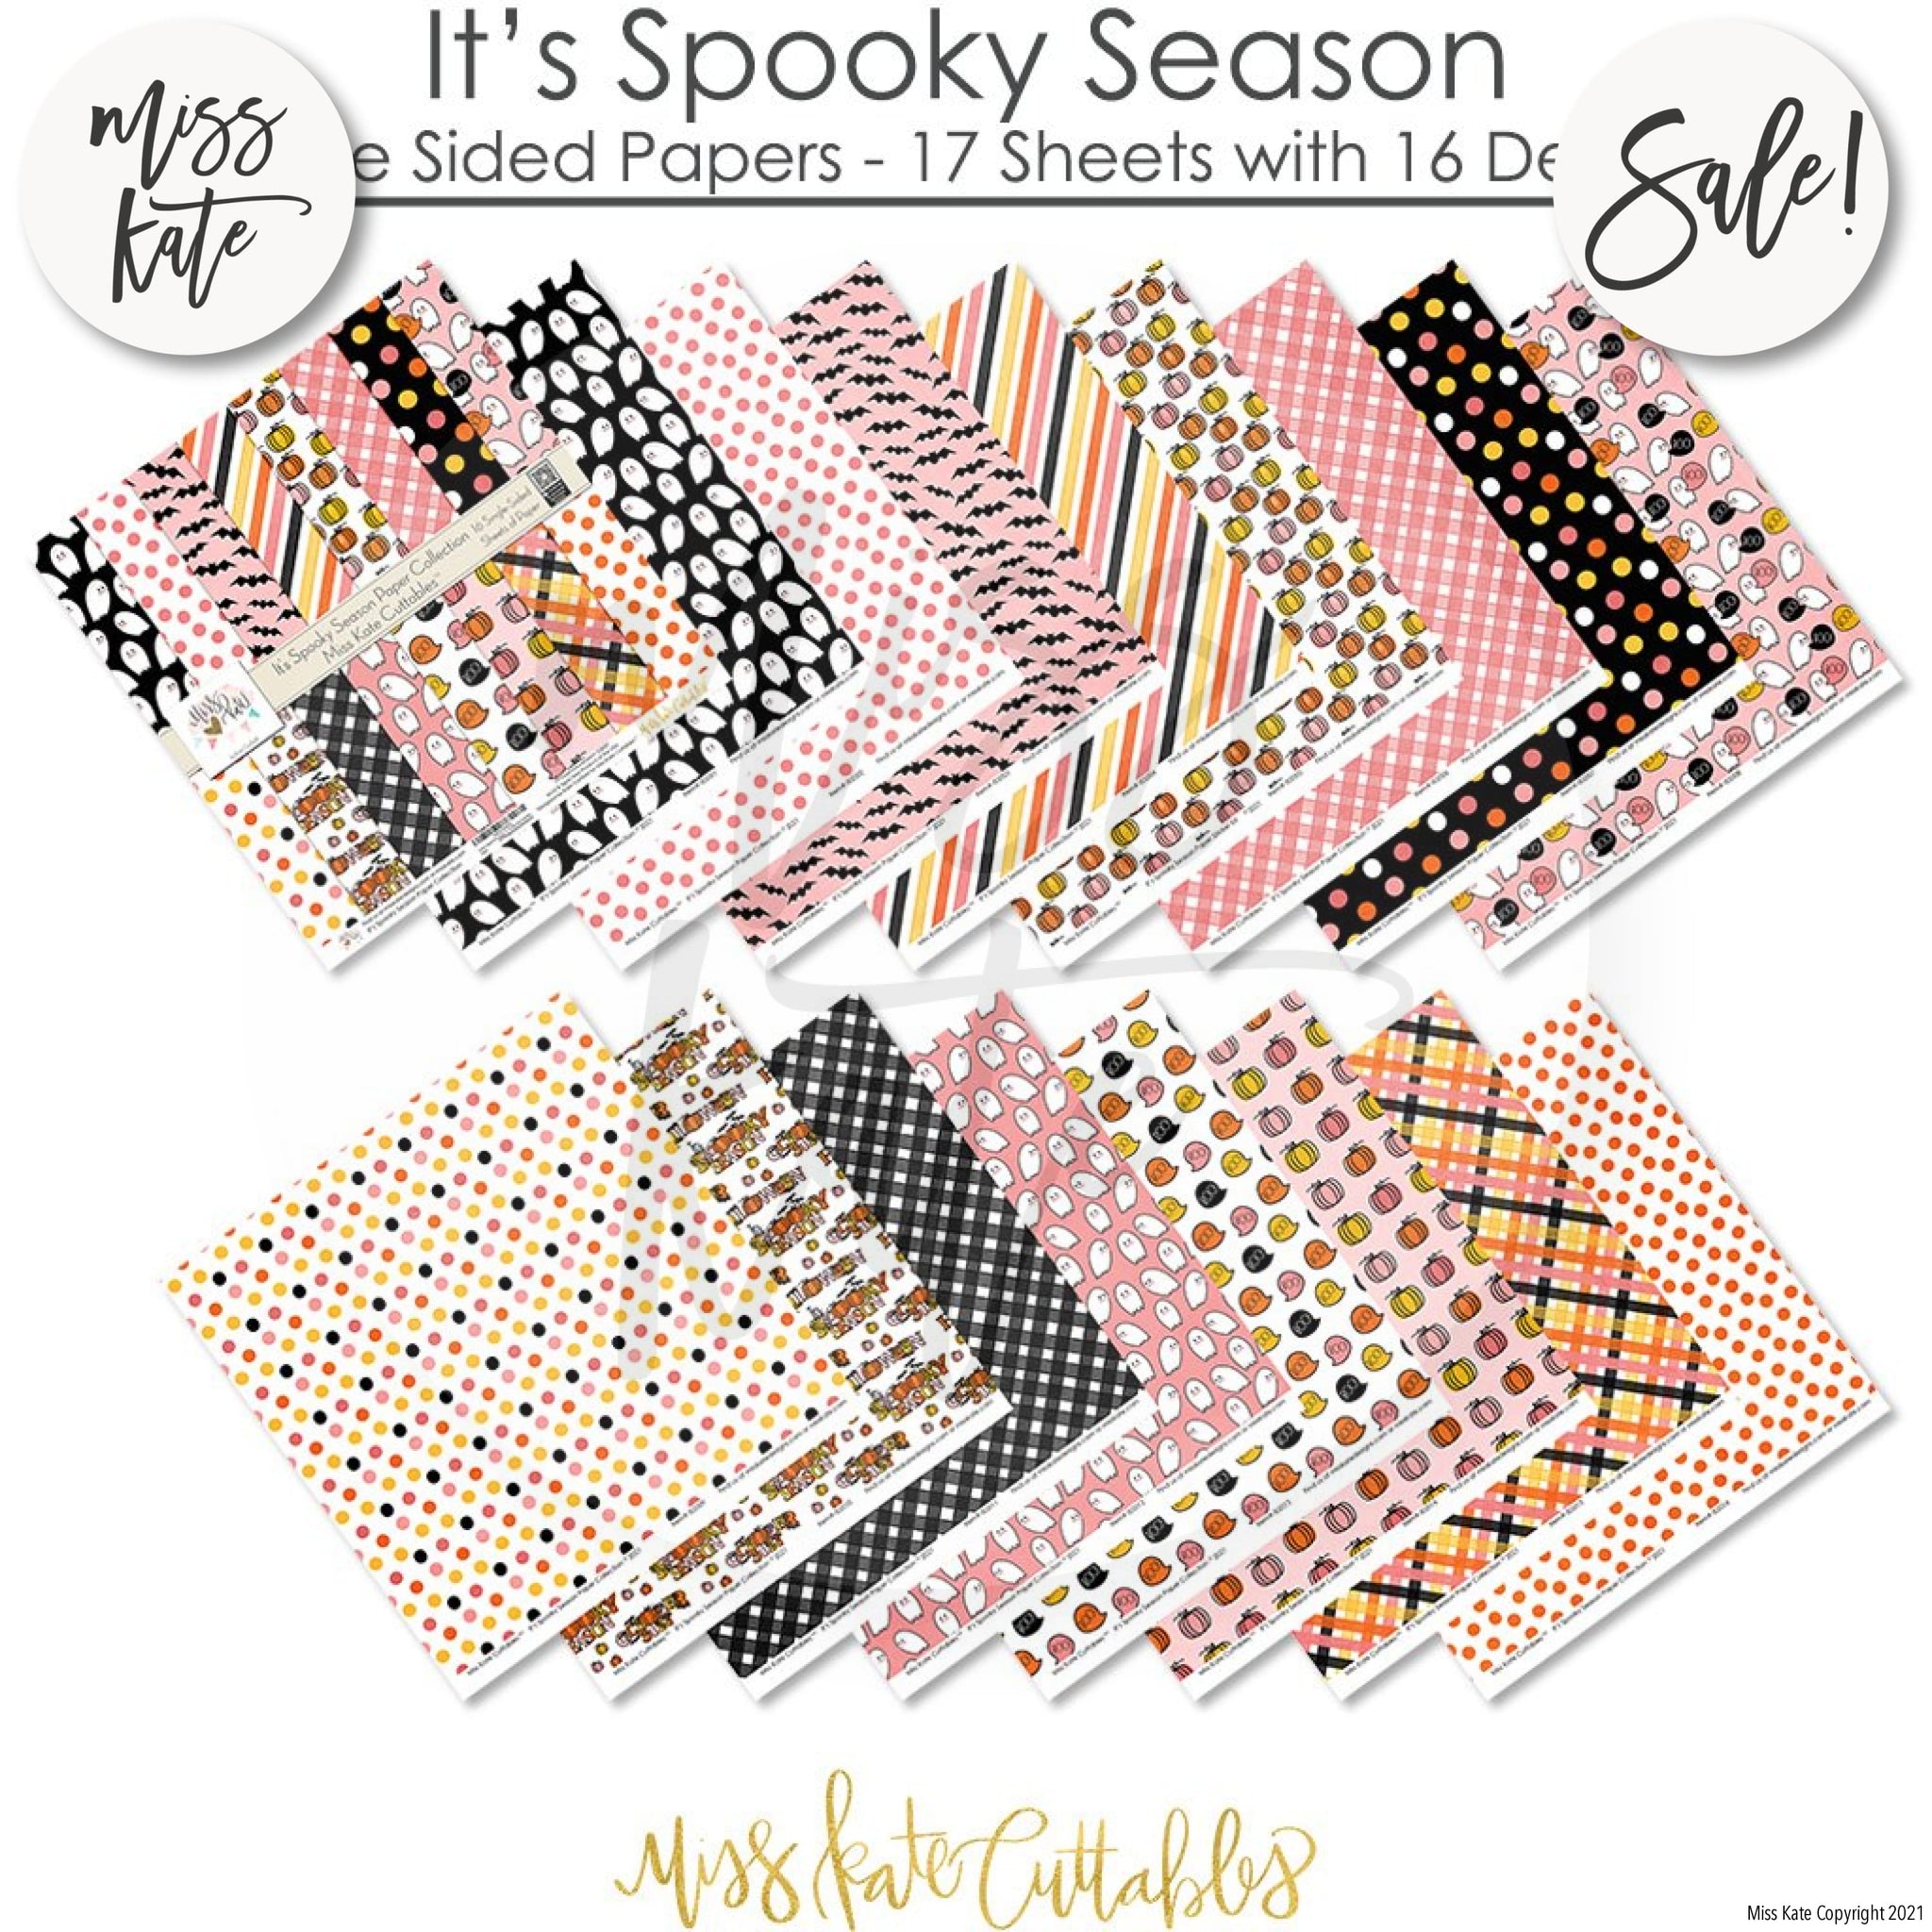 Four Seasons Printable Sticker Sheet Seasonal Planner 